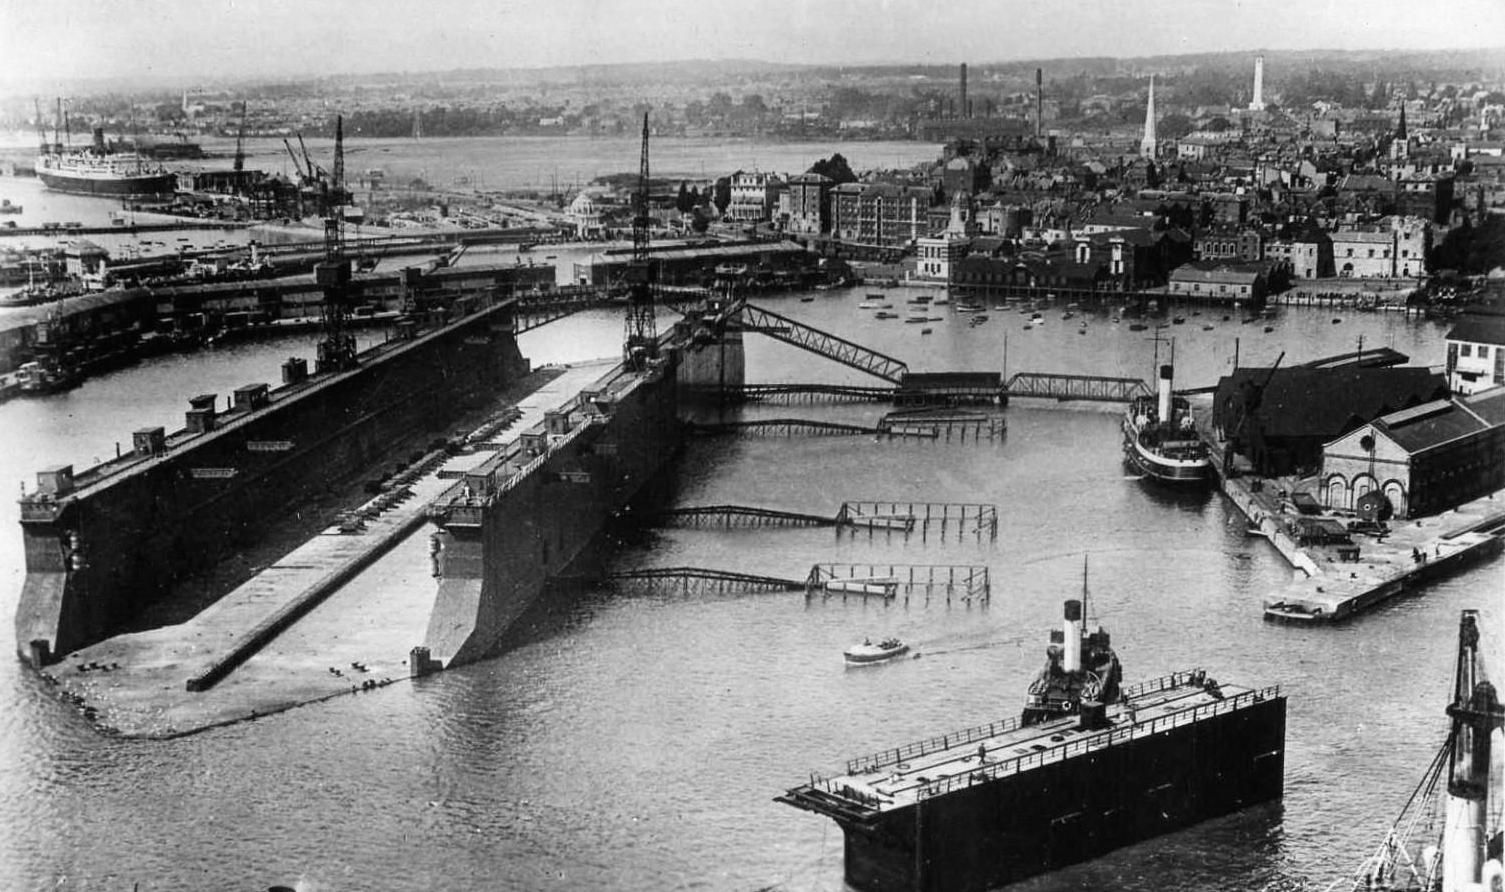 The Southampton Floating Dock